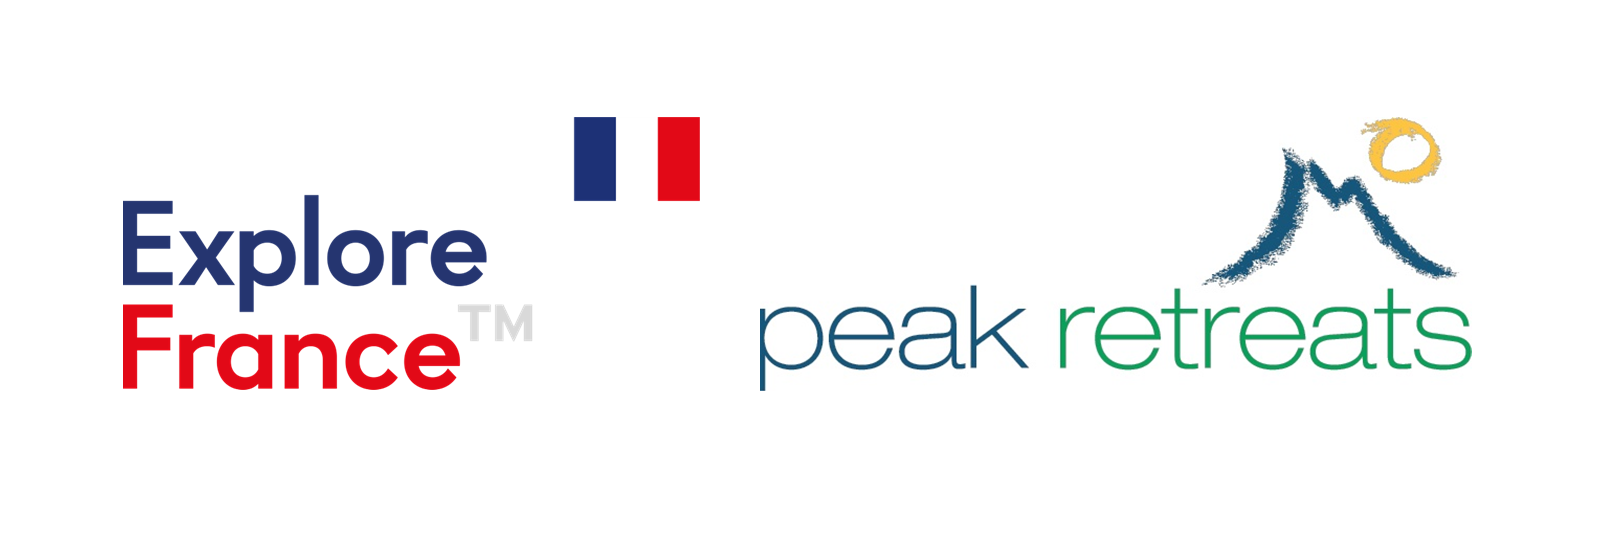 peak-retreats-explore-france-logos